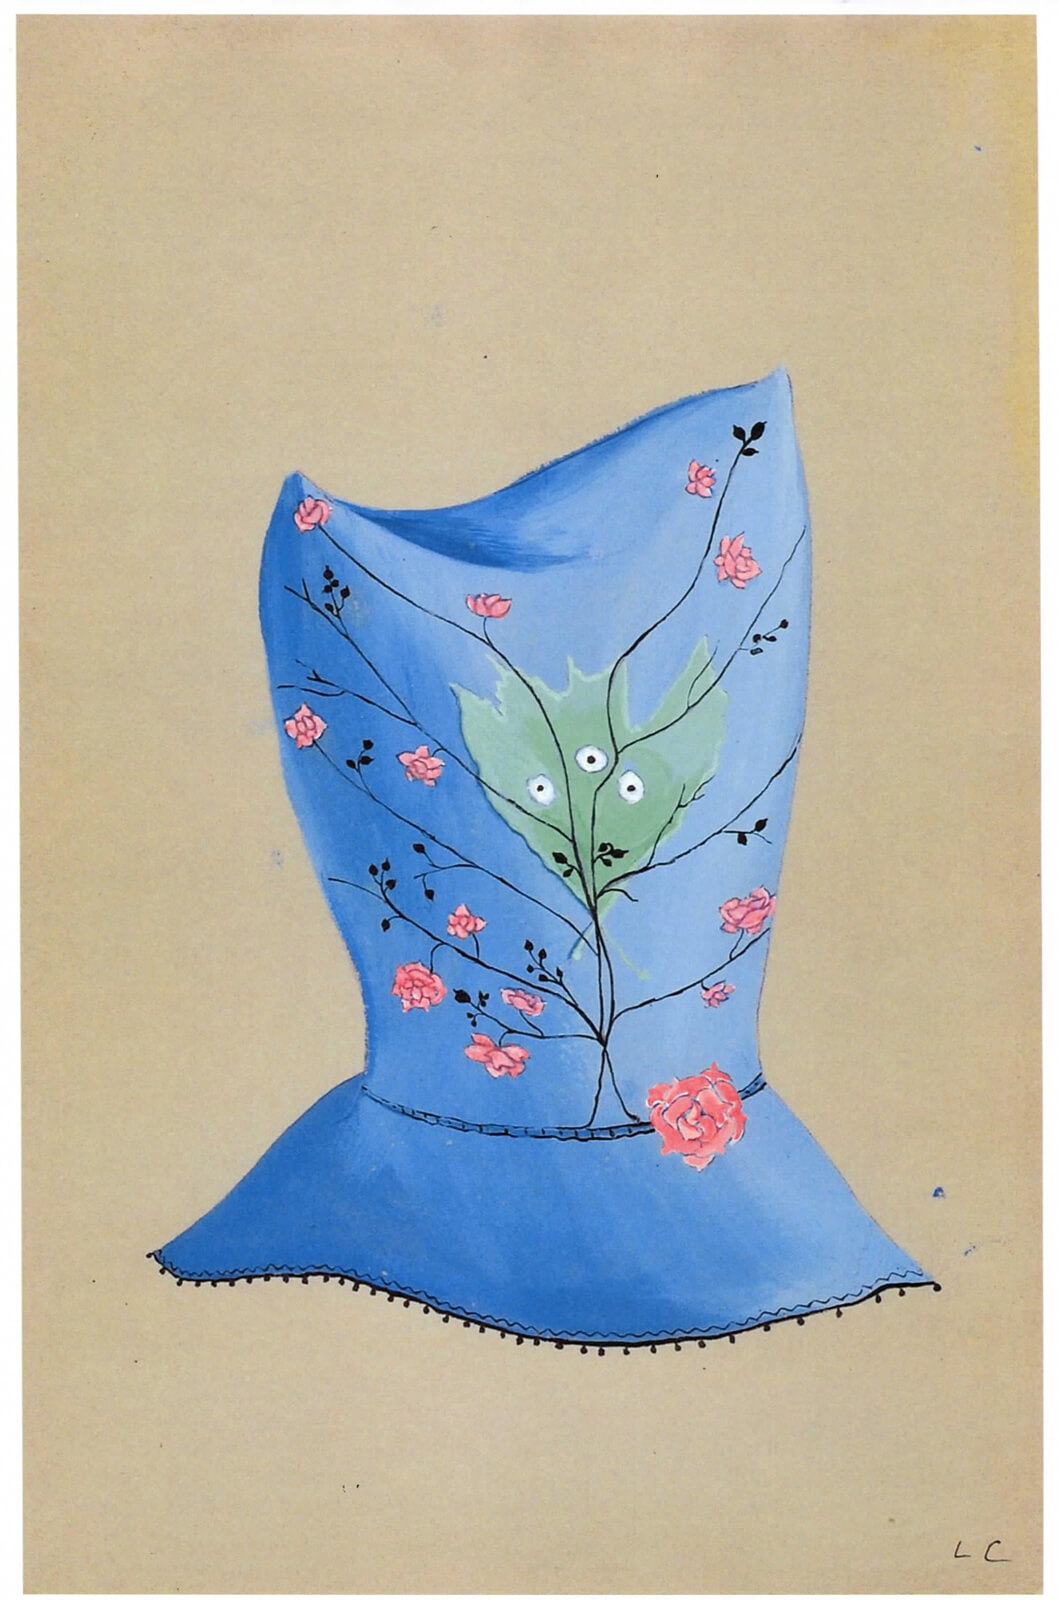 Chapeau a la feuille et rose , c. 1955, Leonora Carrington | |Surrealism and Witchcraft | Lamb Gallery| STIRworld